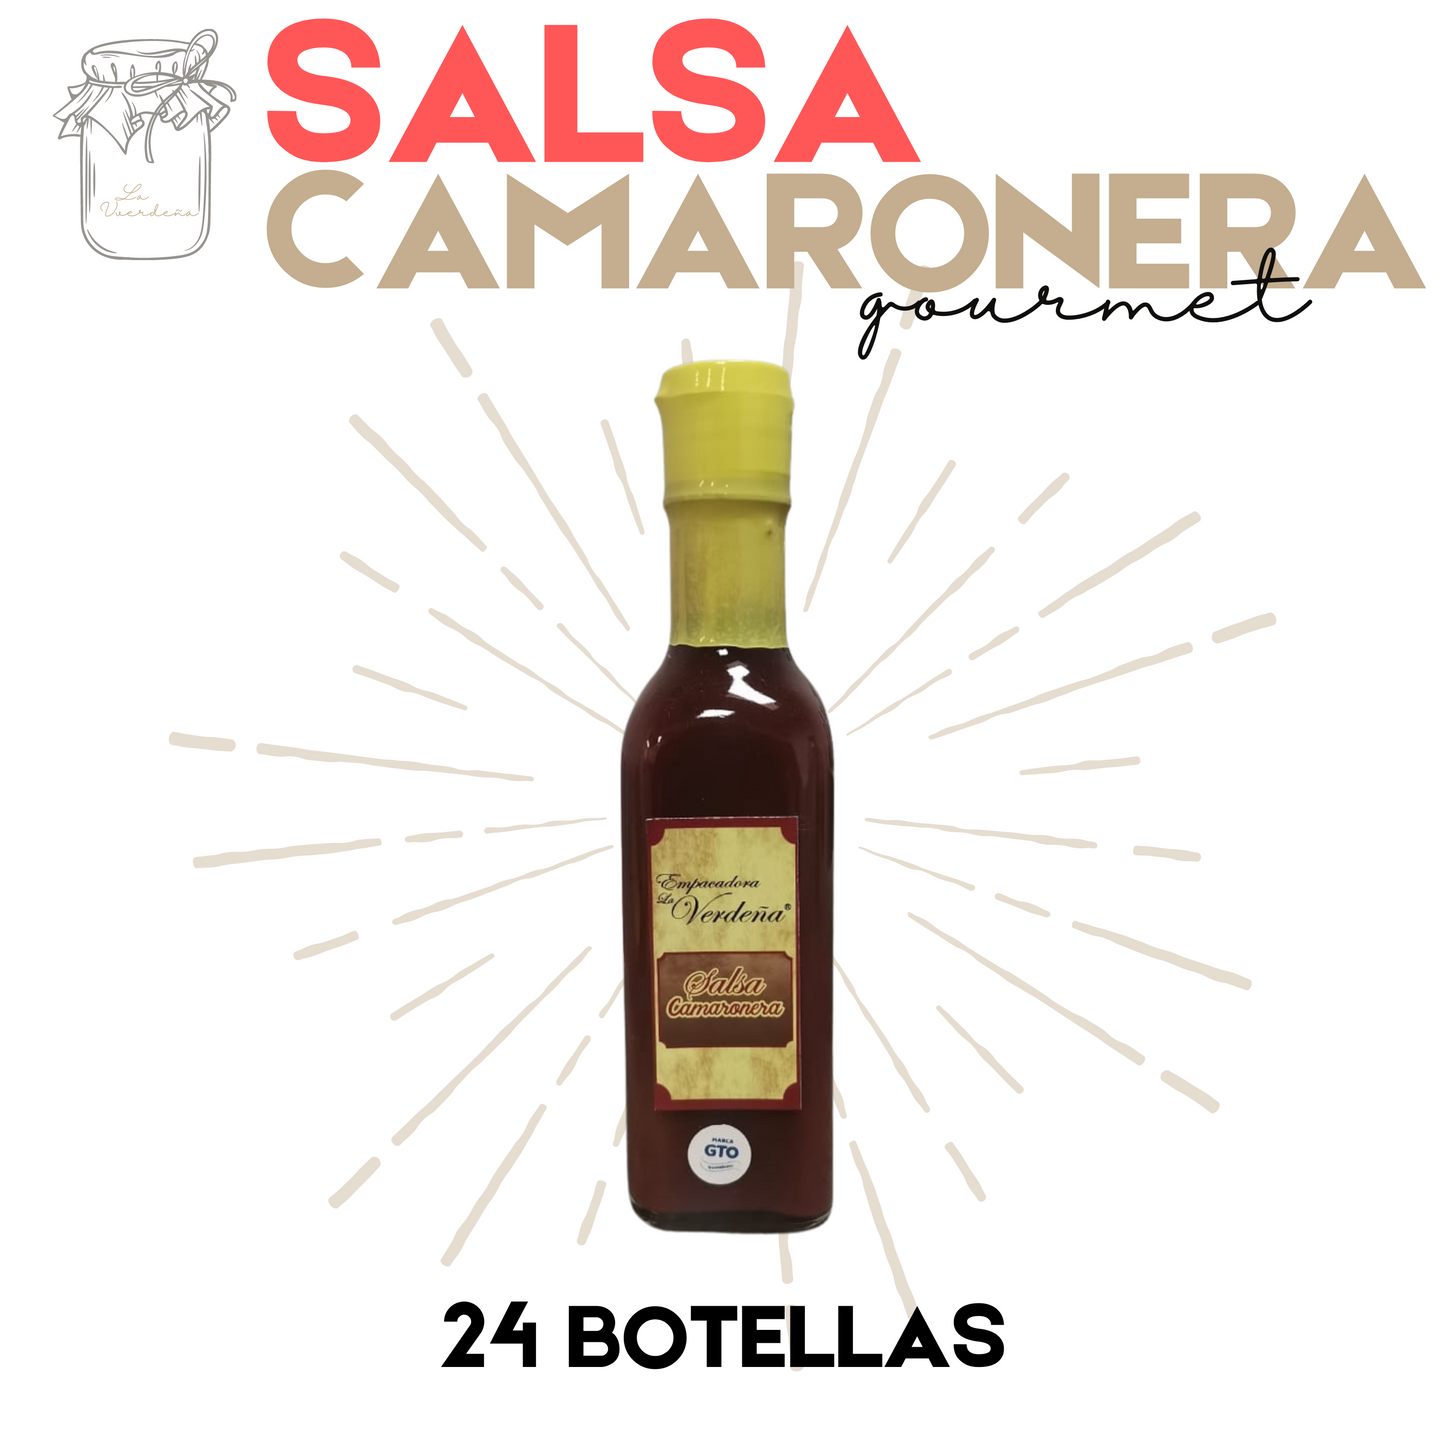 Salsa Camaronera | Cóctel de camarones | Gourmet | Caja Mayoreo | Mexpofood